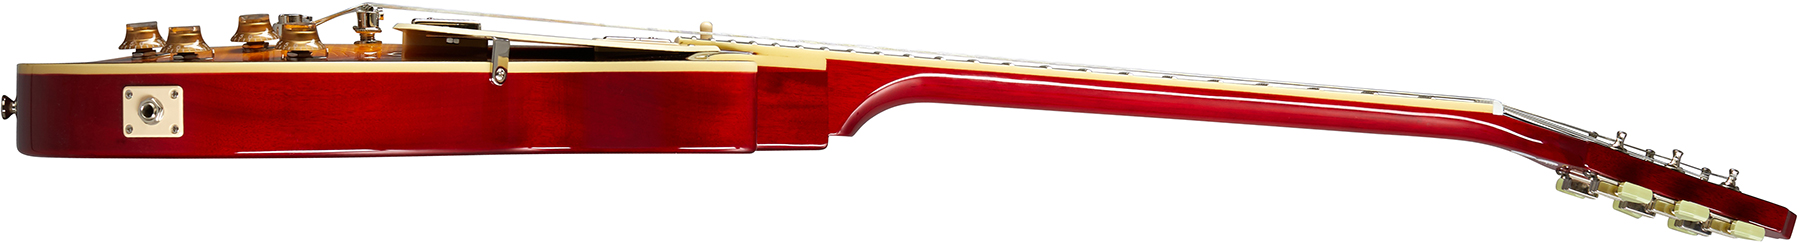 Epiphone Les Paul Standard 50s 2h Ht Rw - Heritage Cherry Sunburst - Enkel gesneden elektrische gitaar - Variation 2